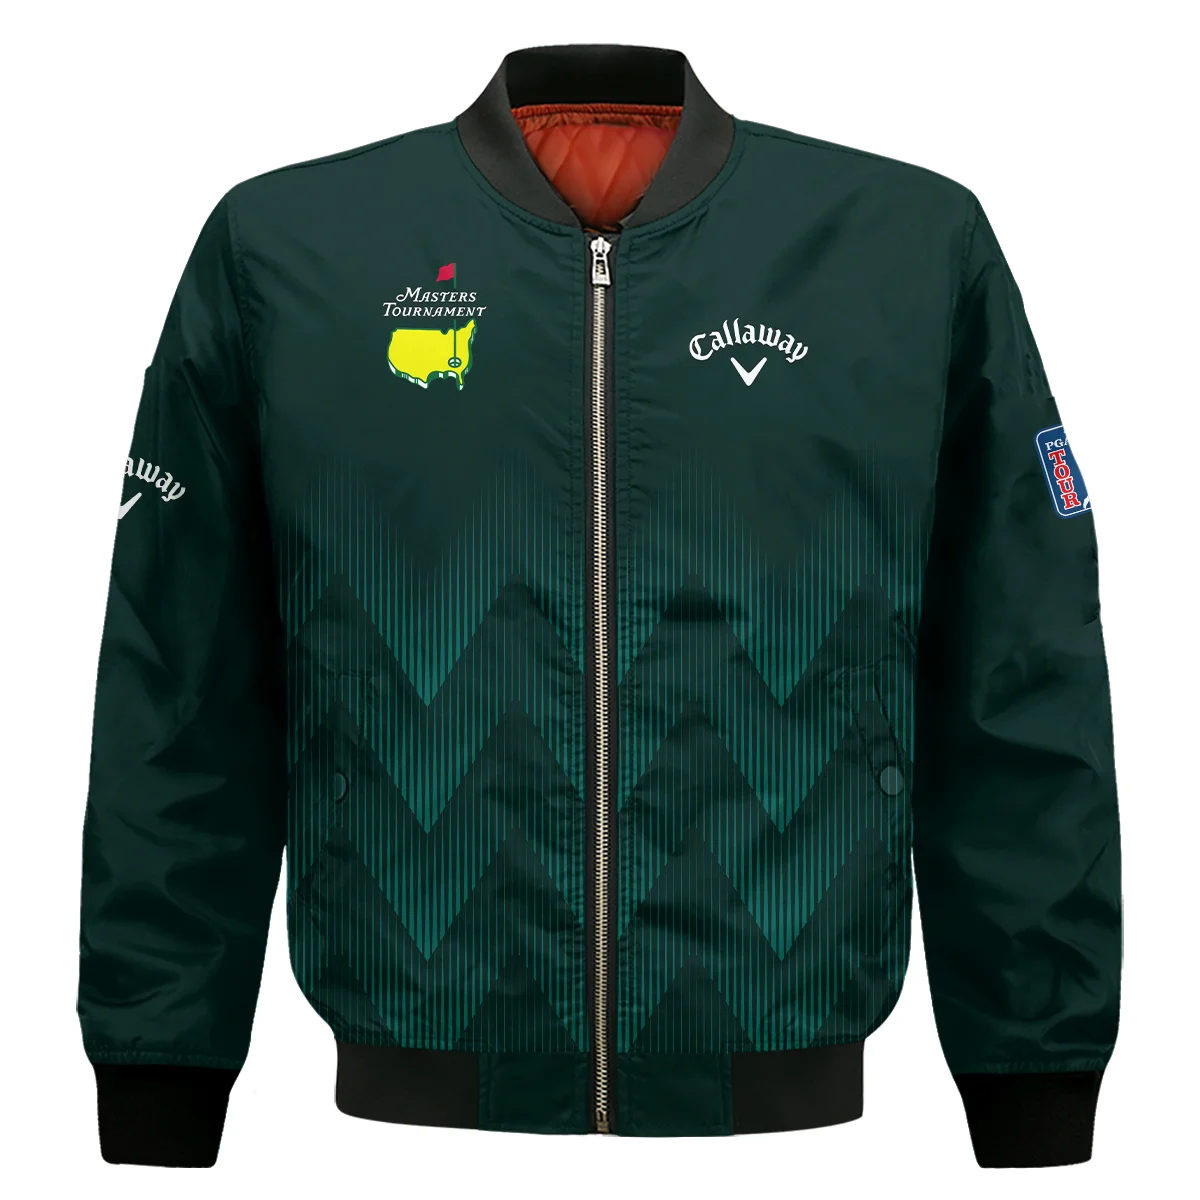 Masters Tournament Golf Callaway Bomber Jacket Zigzag Pattern Dark Green Golf Sports Bomber Jacket GBJ1311